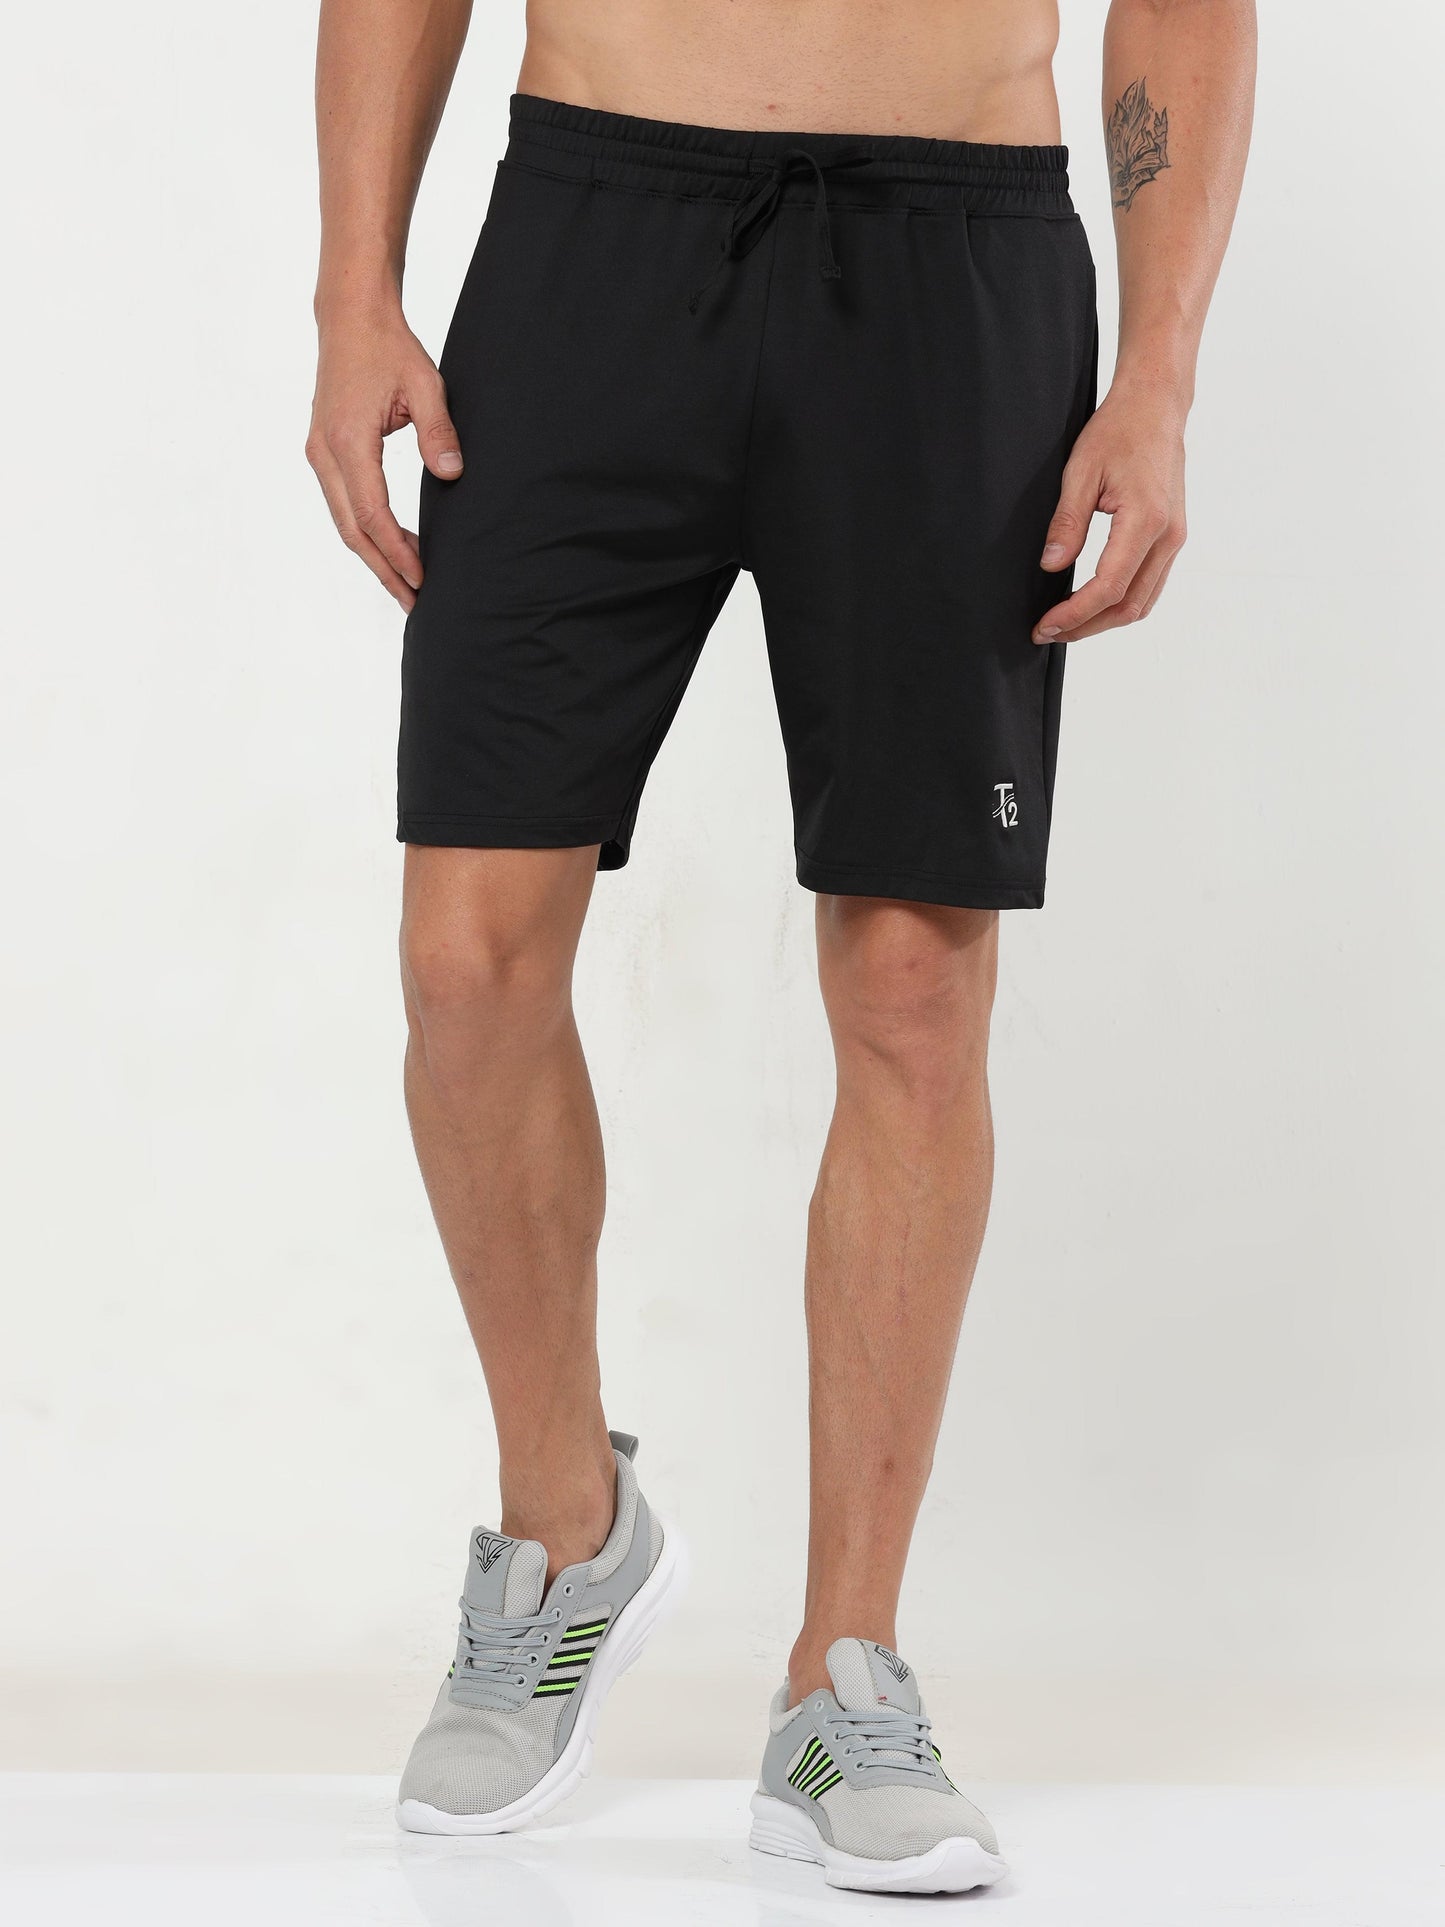 Athleisure Active Men's Shorts - Black